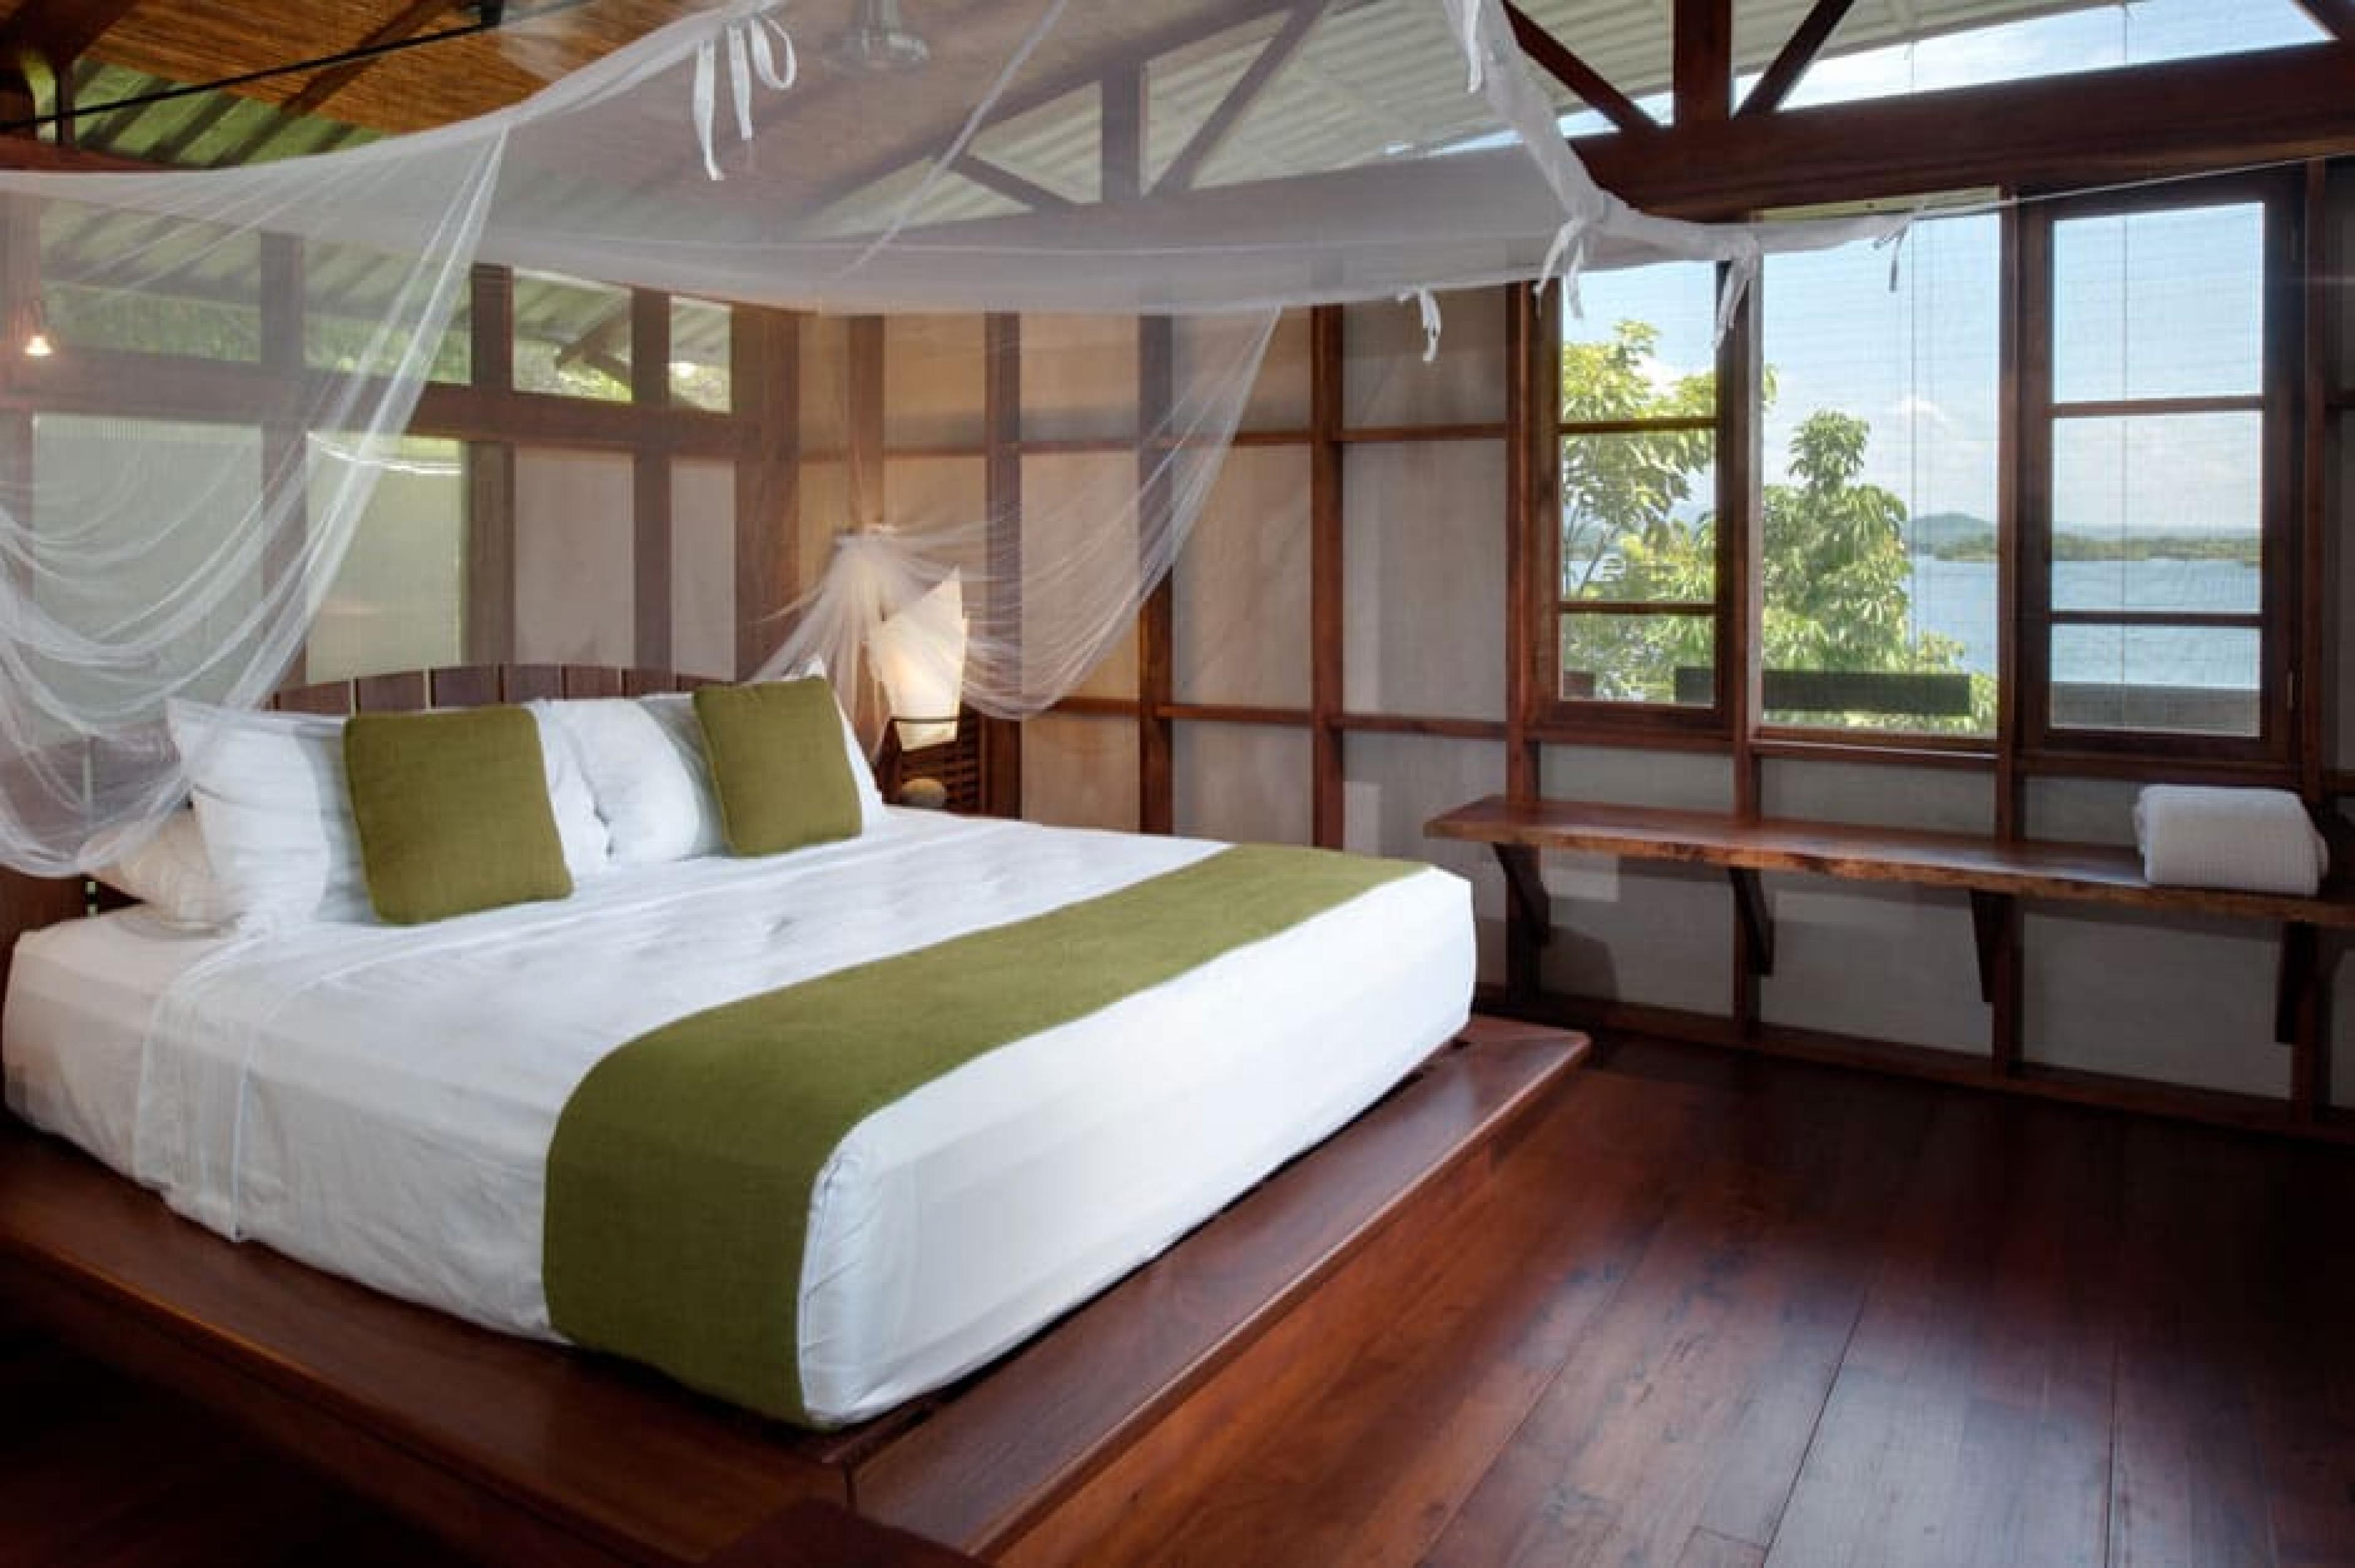 Bedroom at Jicaro Island Eco-Lodge, Nicaragua